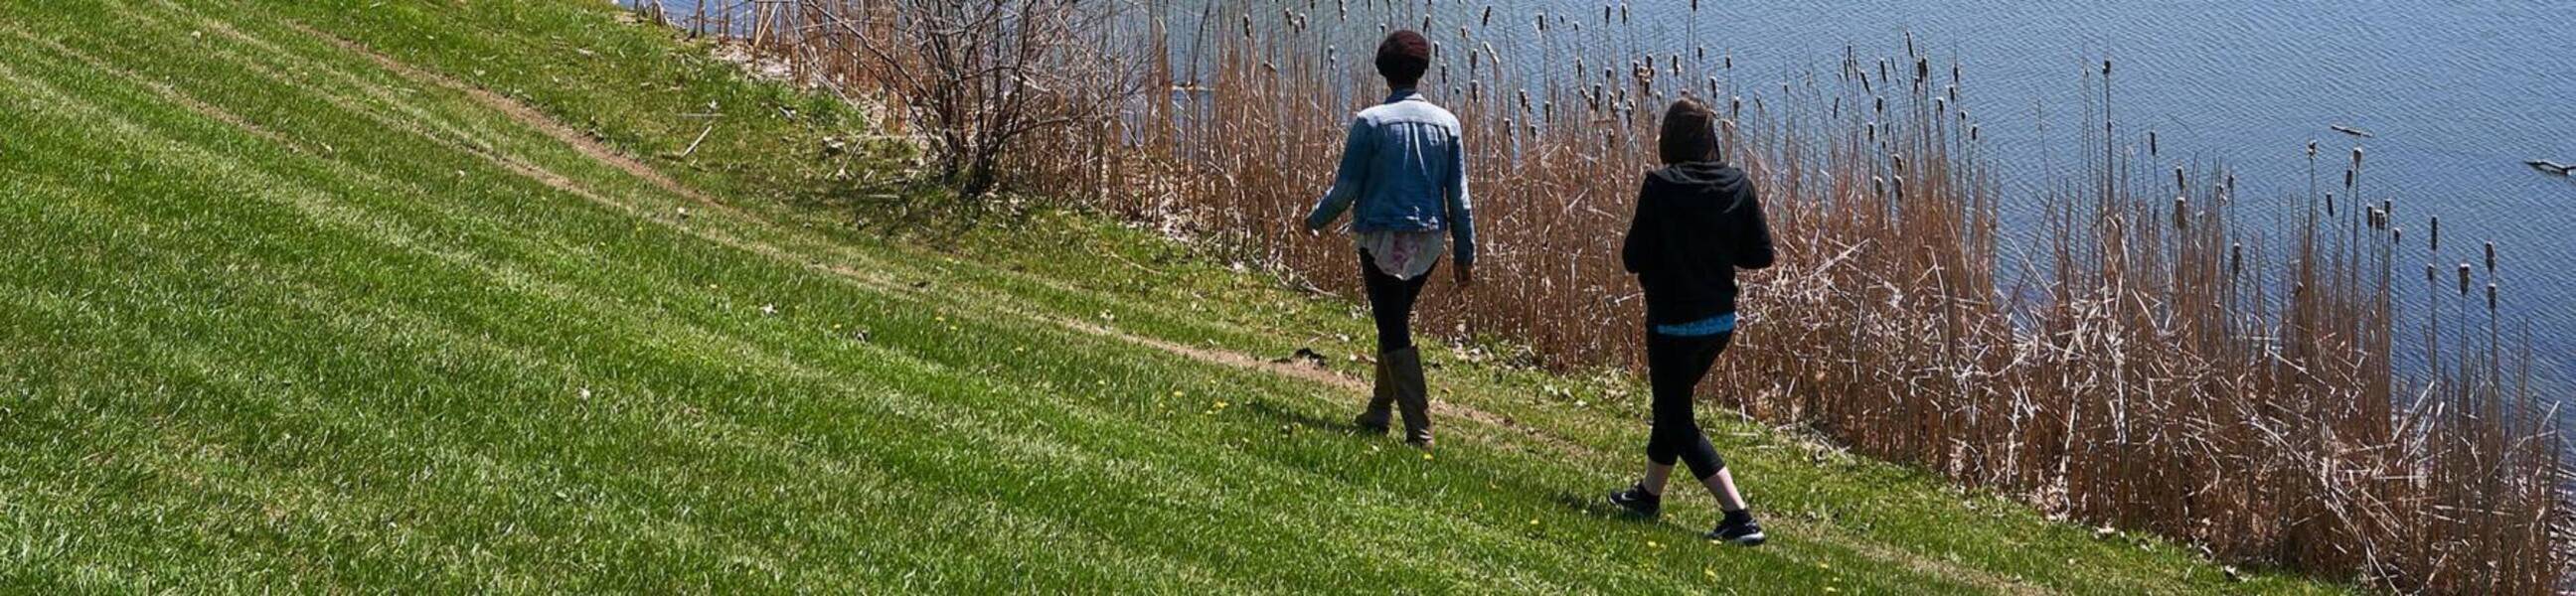 Ursuline college student walk next to pond